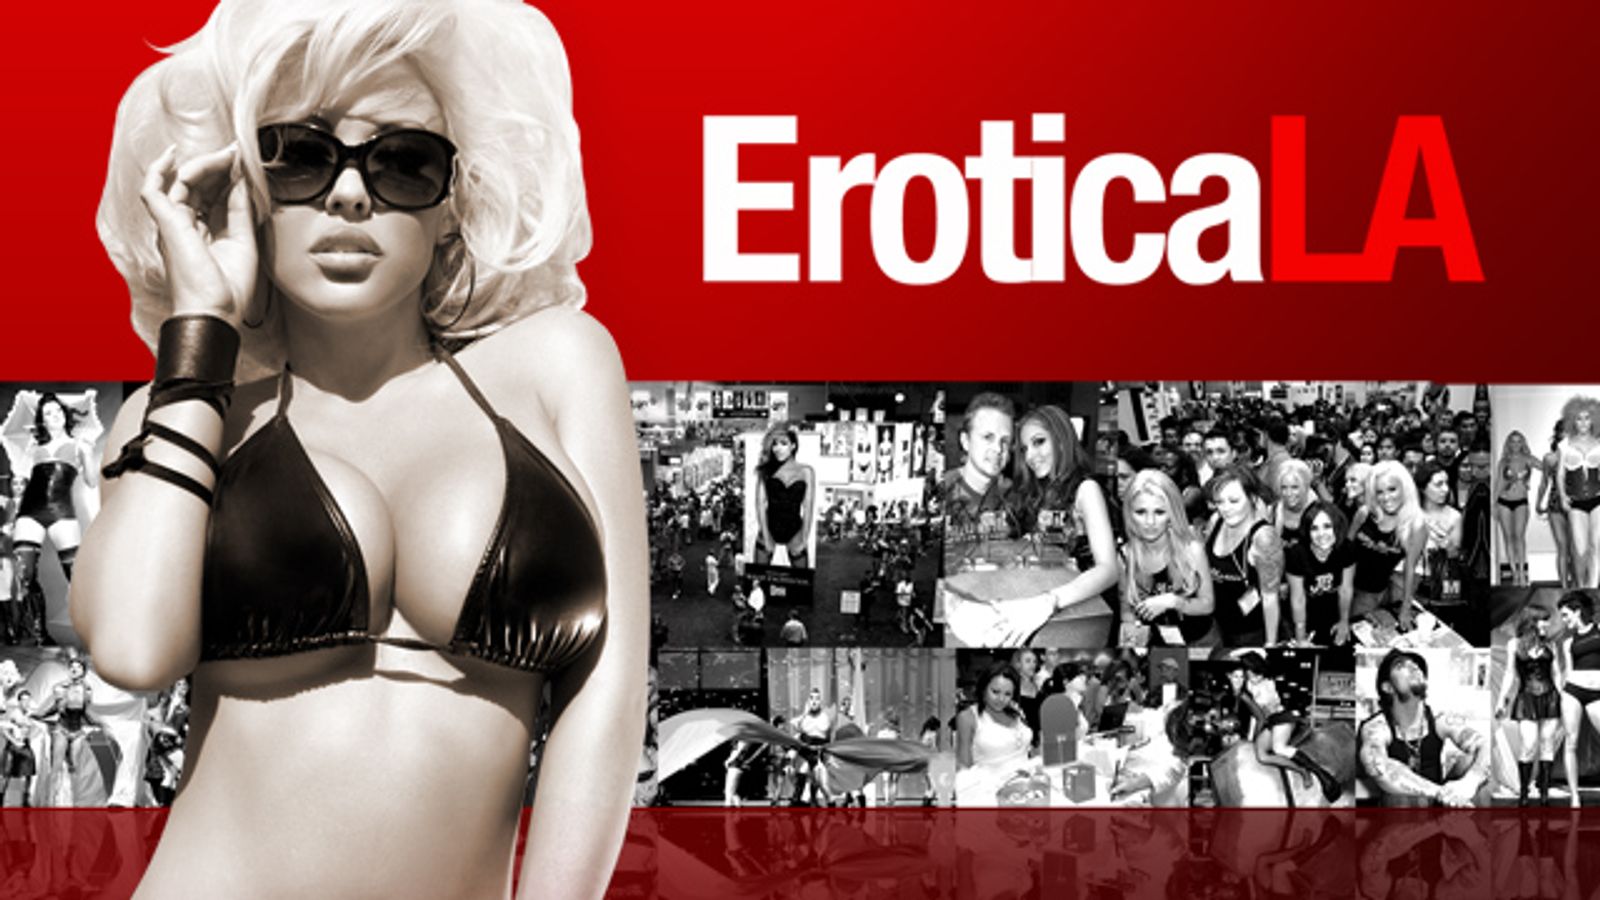 Erotica LA Seminar Schedule Announced